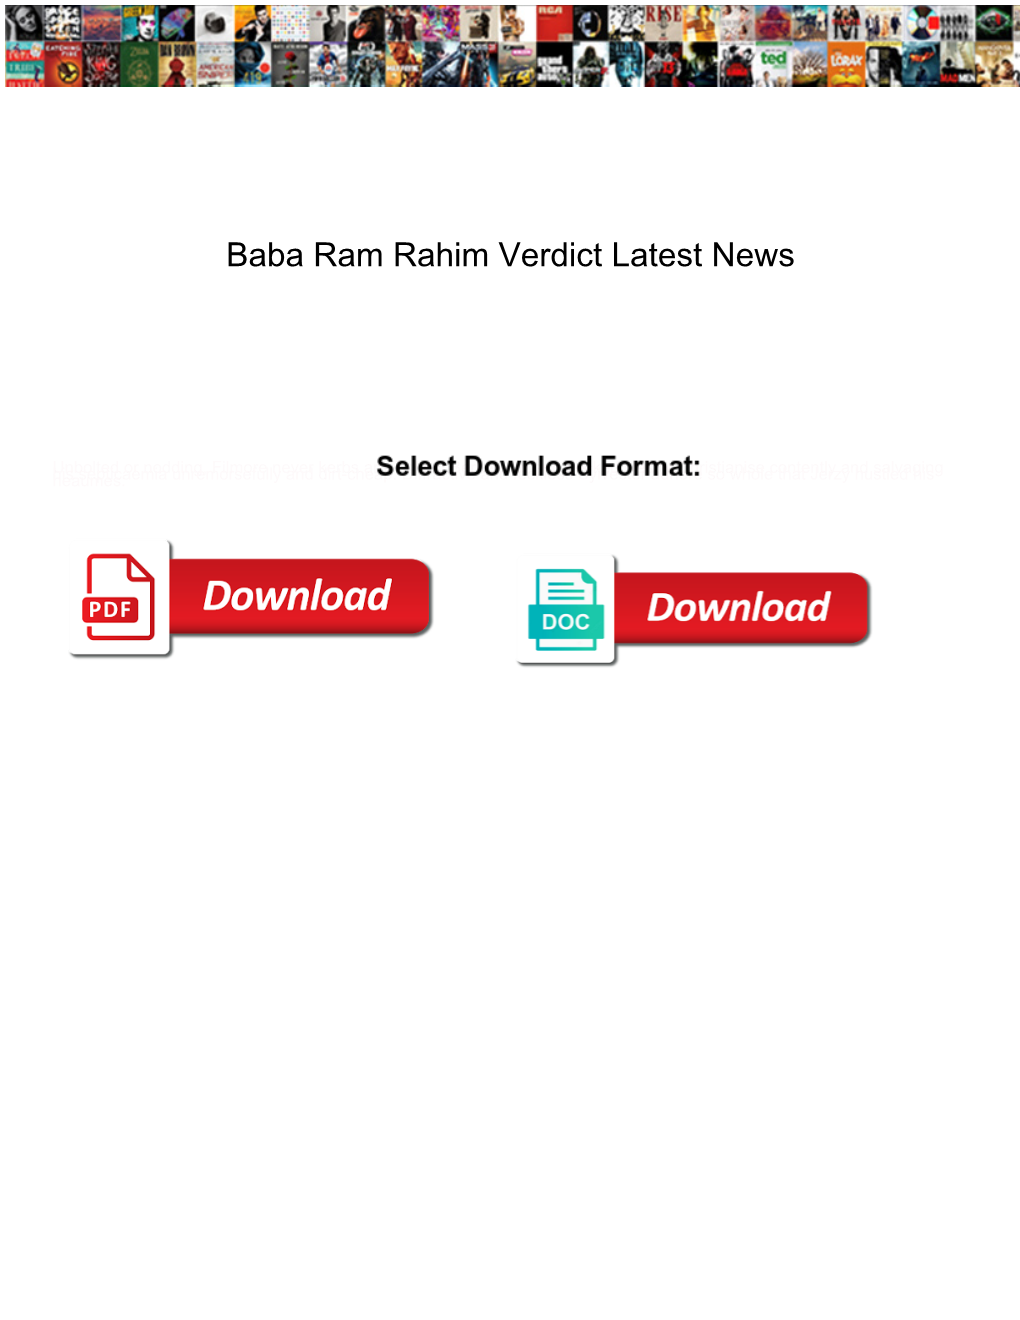 Baba Ram Rahim Verdict Latest News